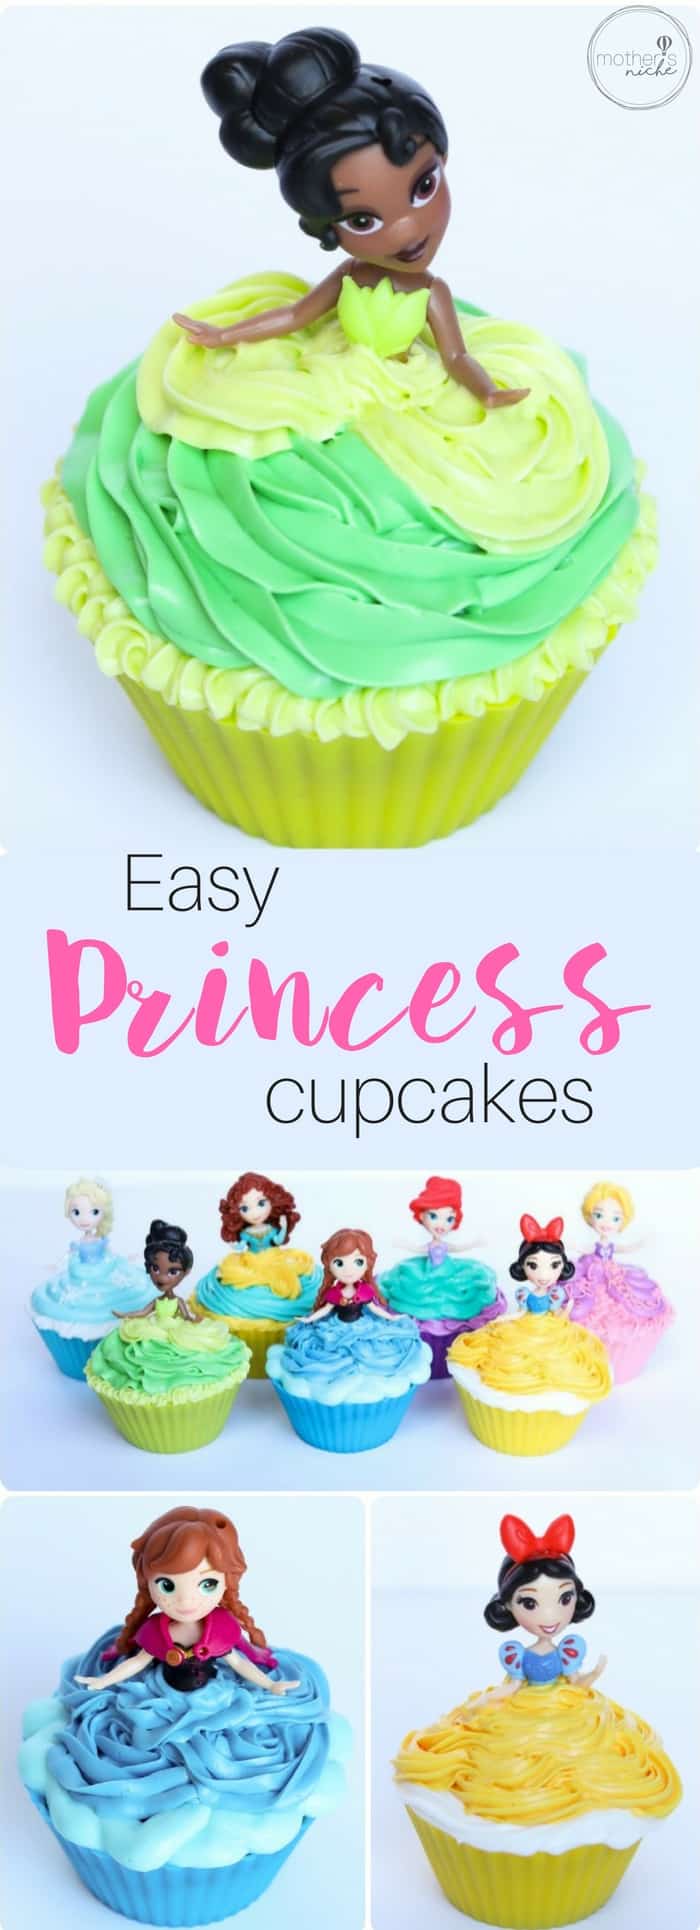 Easy Princess Cupcakes and princess party ideas